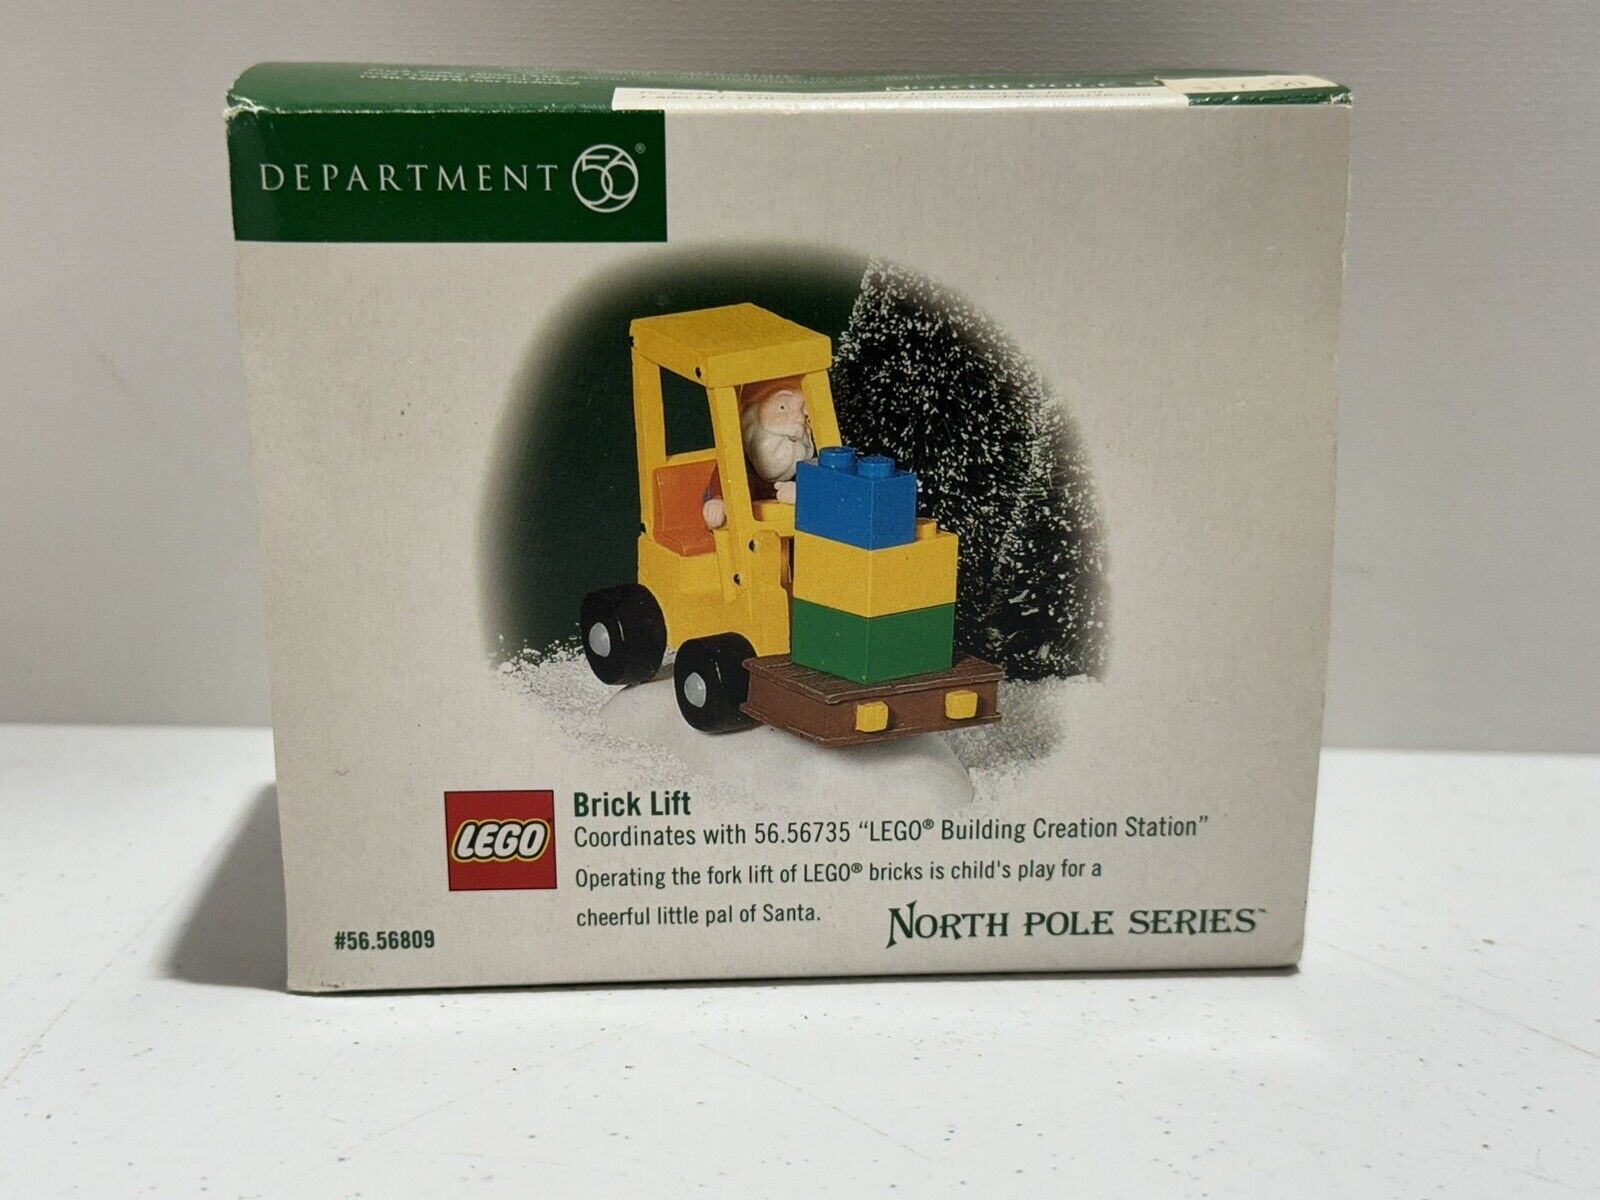 Dept 56 LEGO BRICK LIFT 56.56809 NORTH POLE Village Fork Lift Department 56